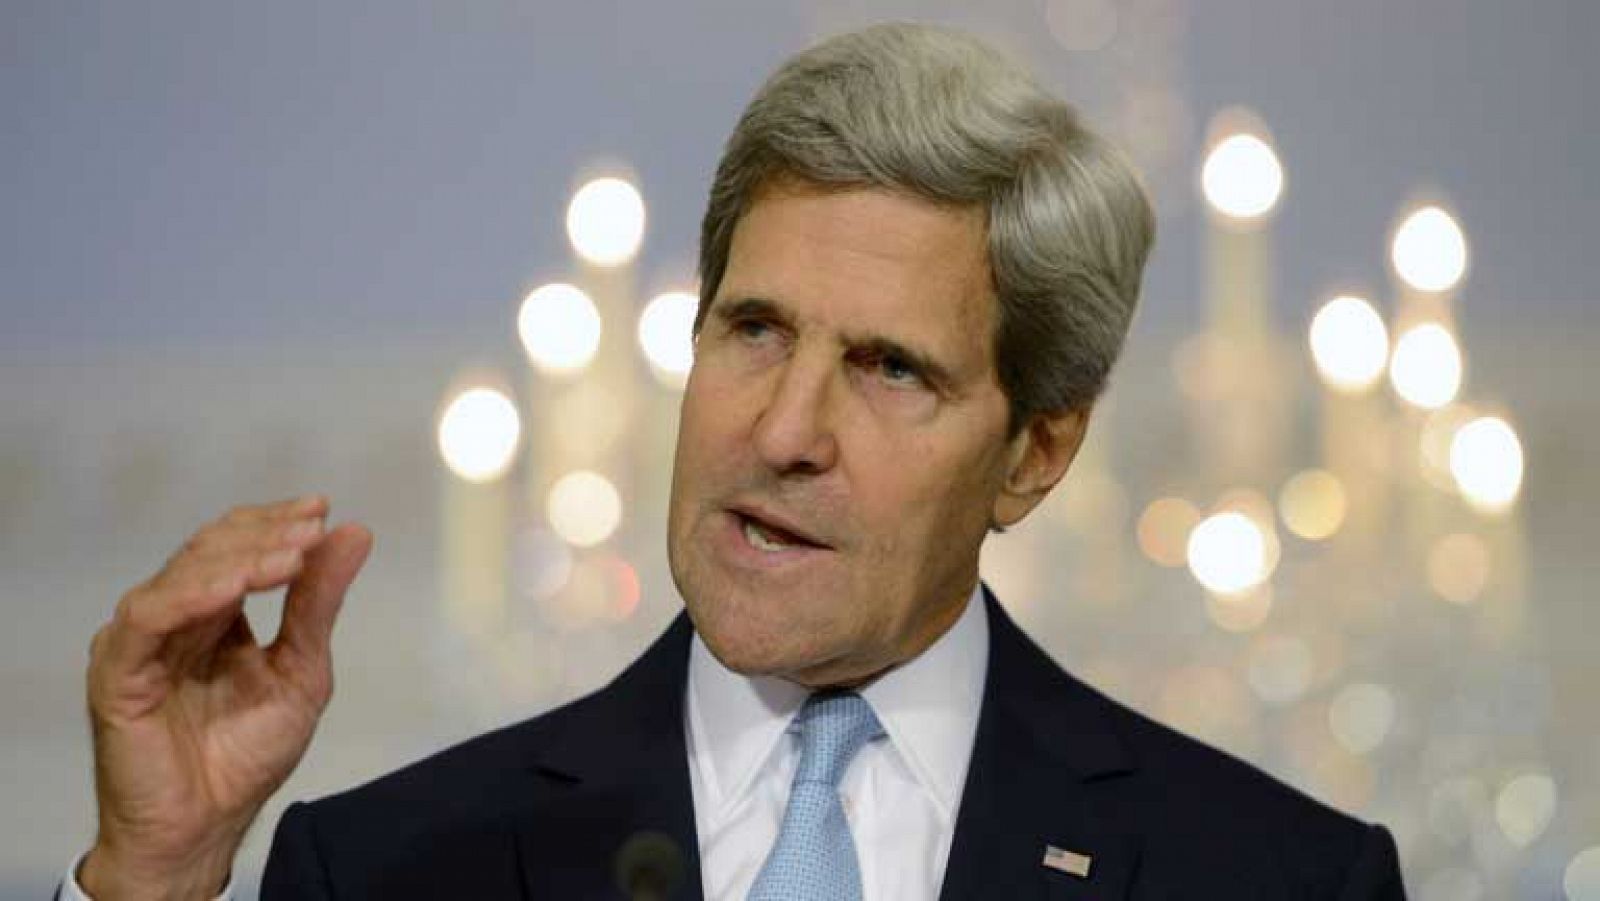 Kerry asegura que los análisis confirman gas sarín